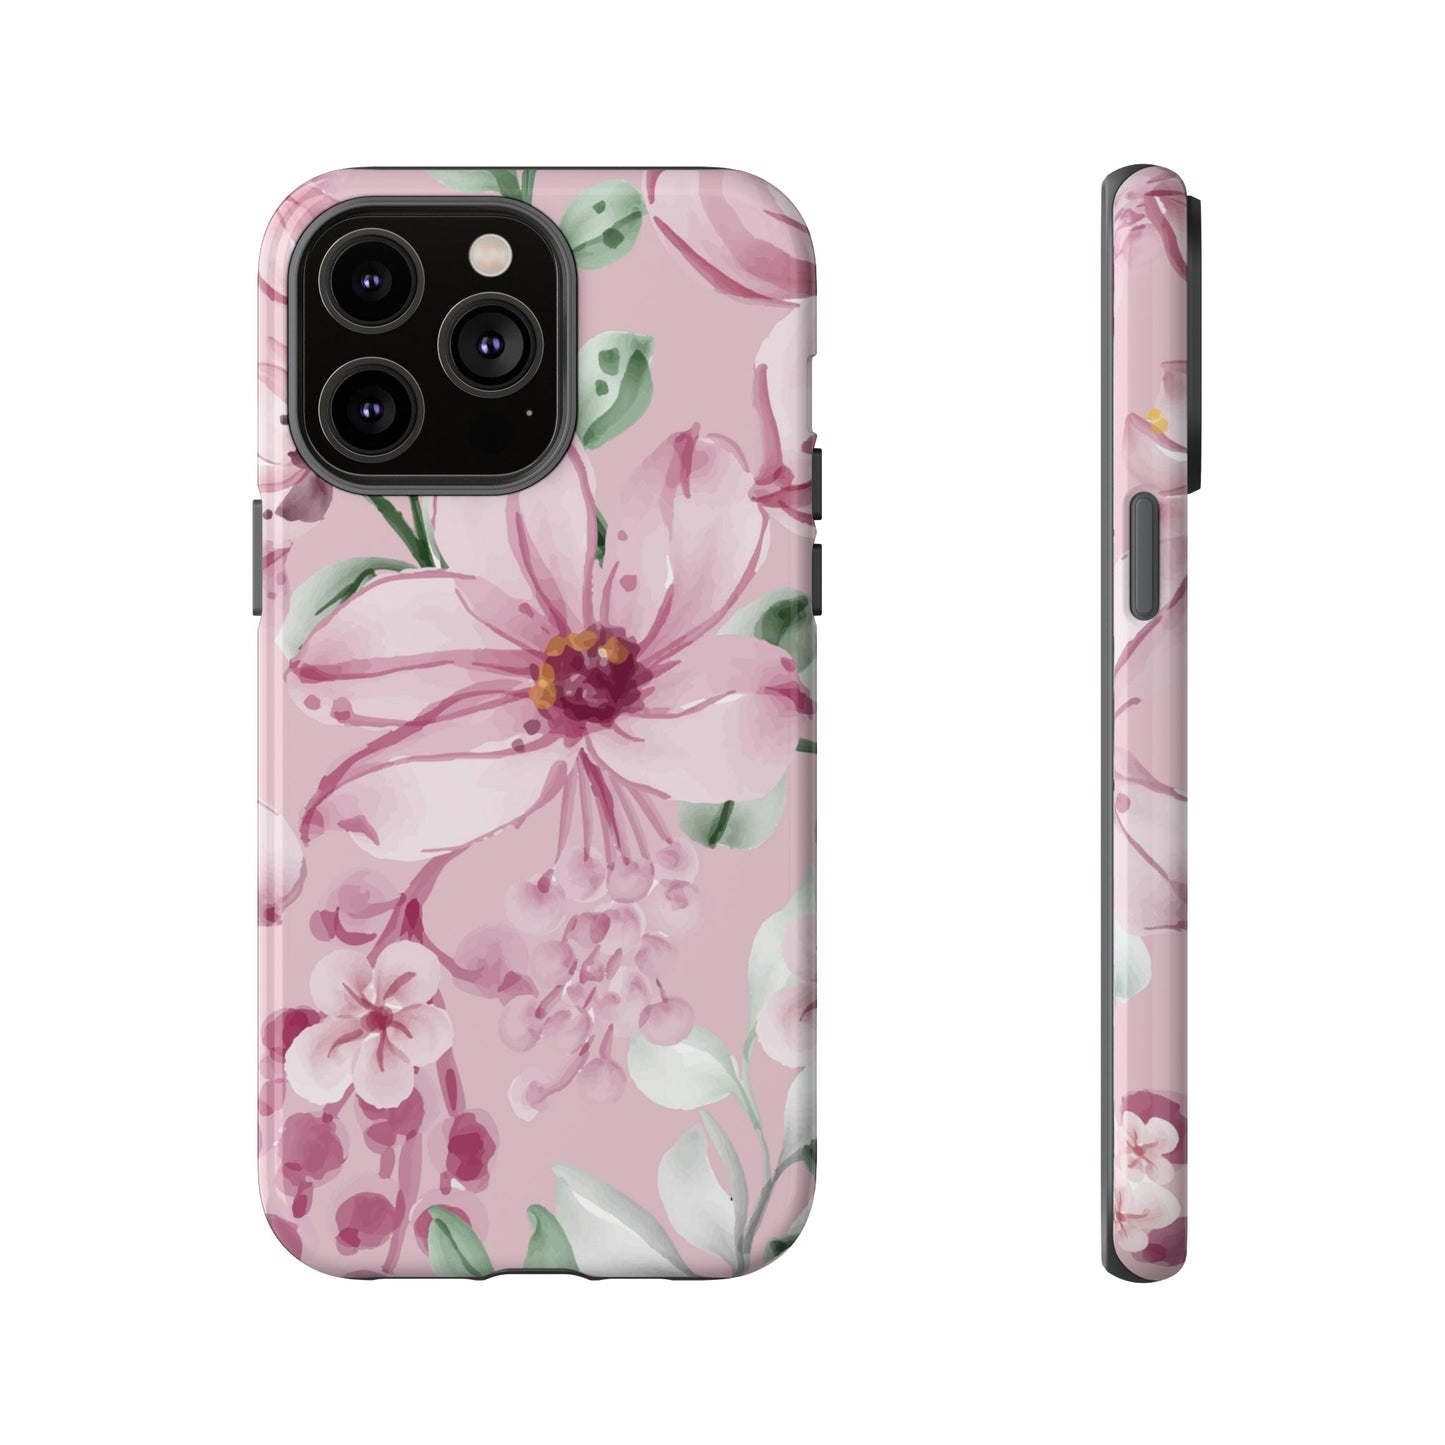 Blush Pink Floral Phone case fits iPhone Samsung Galaxy Google Pixel - Cheerful Lane